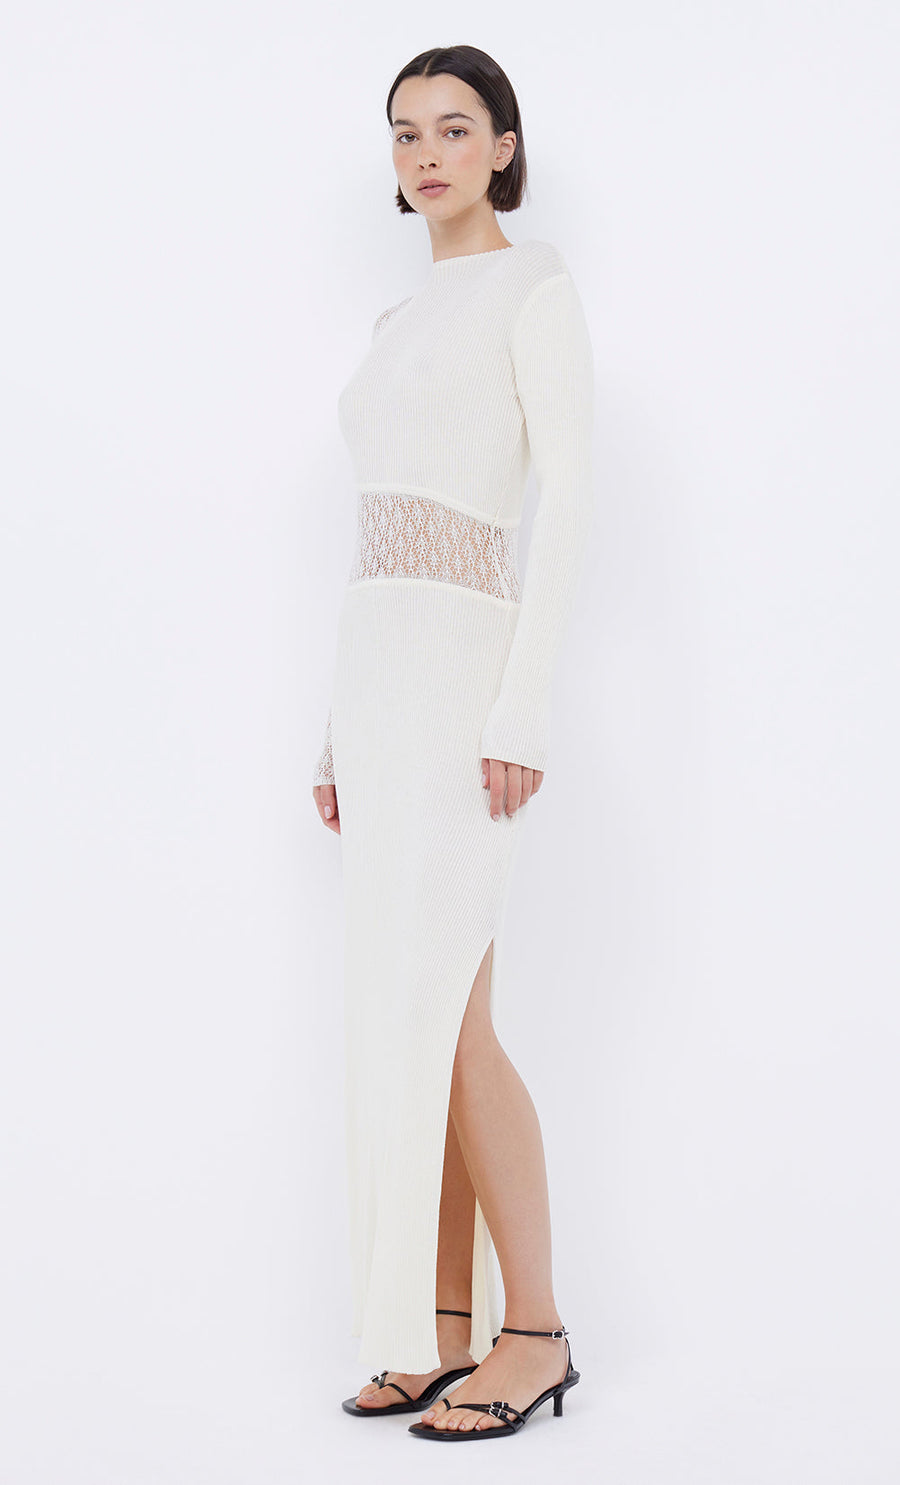 Bec + Bridge - Chantelle Long Sleeve Dresss in Ivory